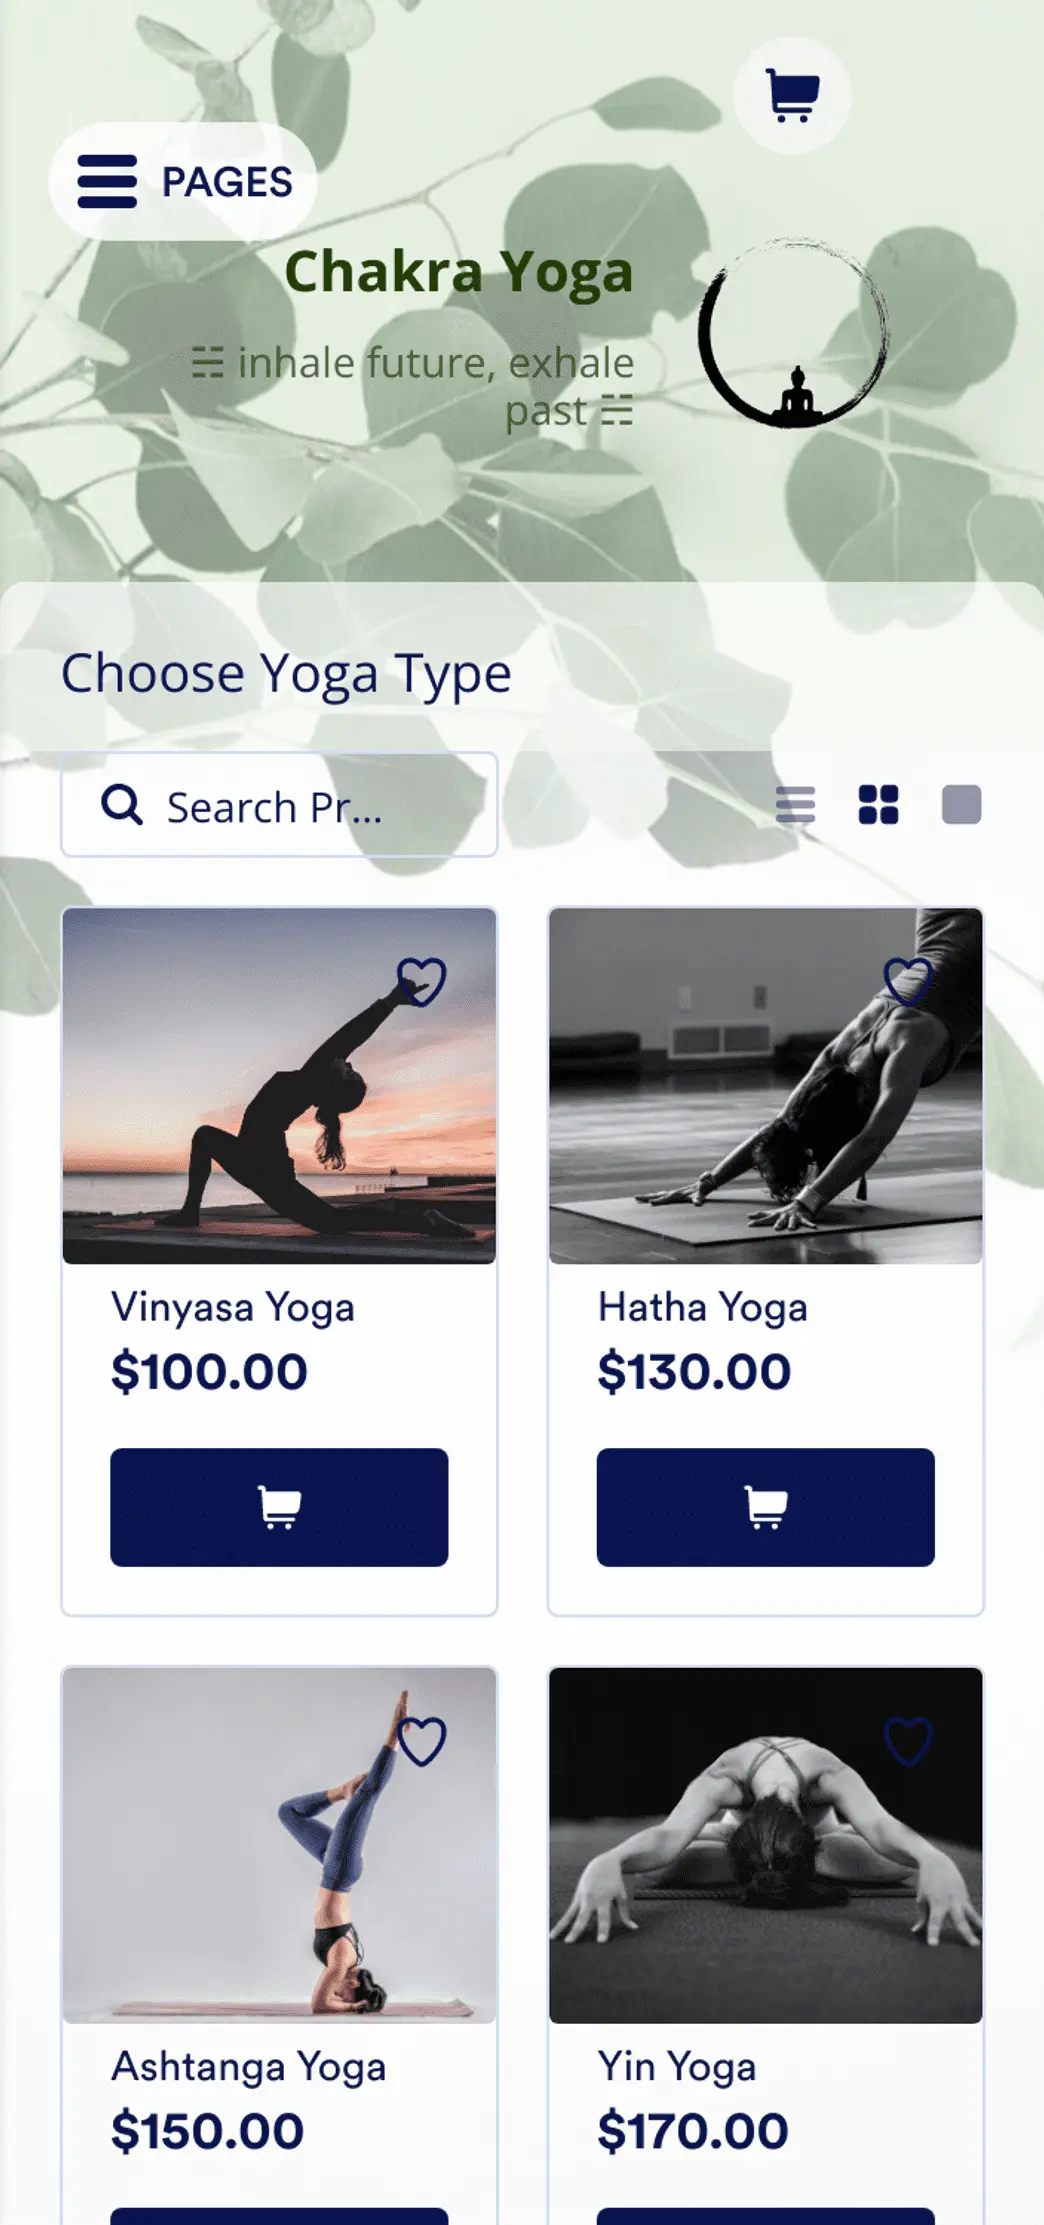 Yoga Studio App